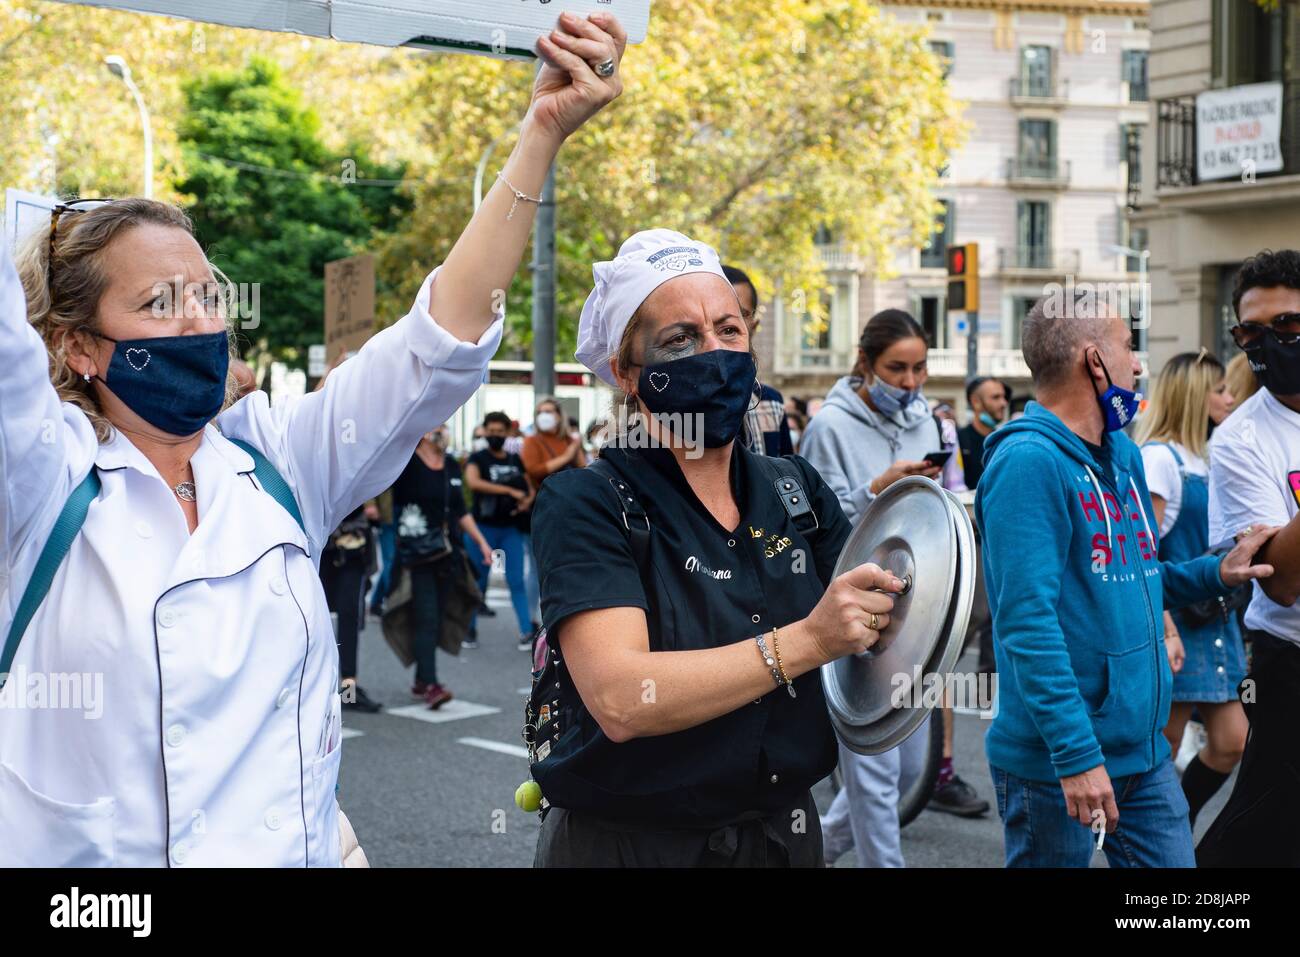 No al Cierre, Protest Against Bars and Restaurants Shutdown, Barcelona Stock Photo